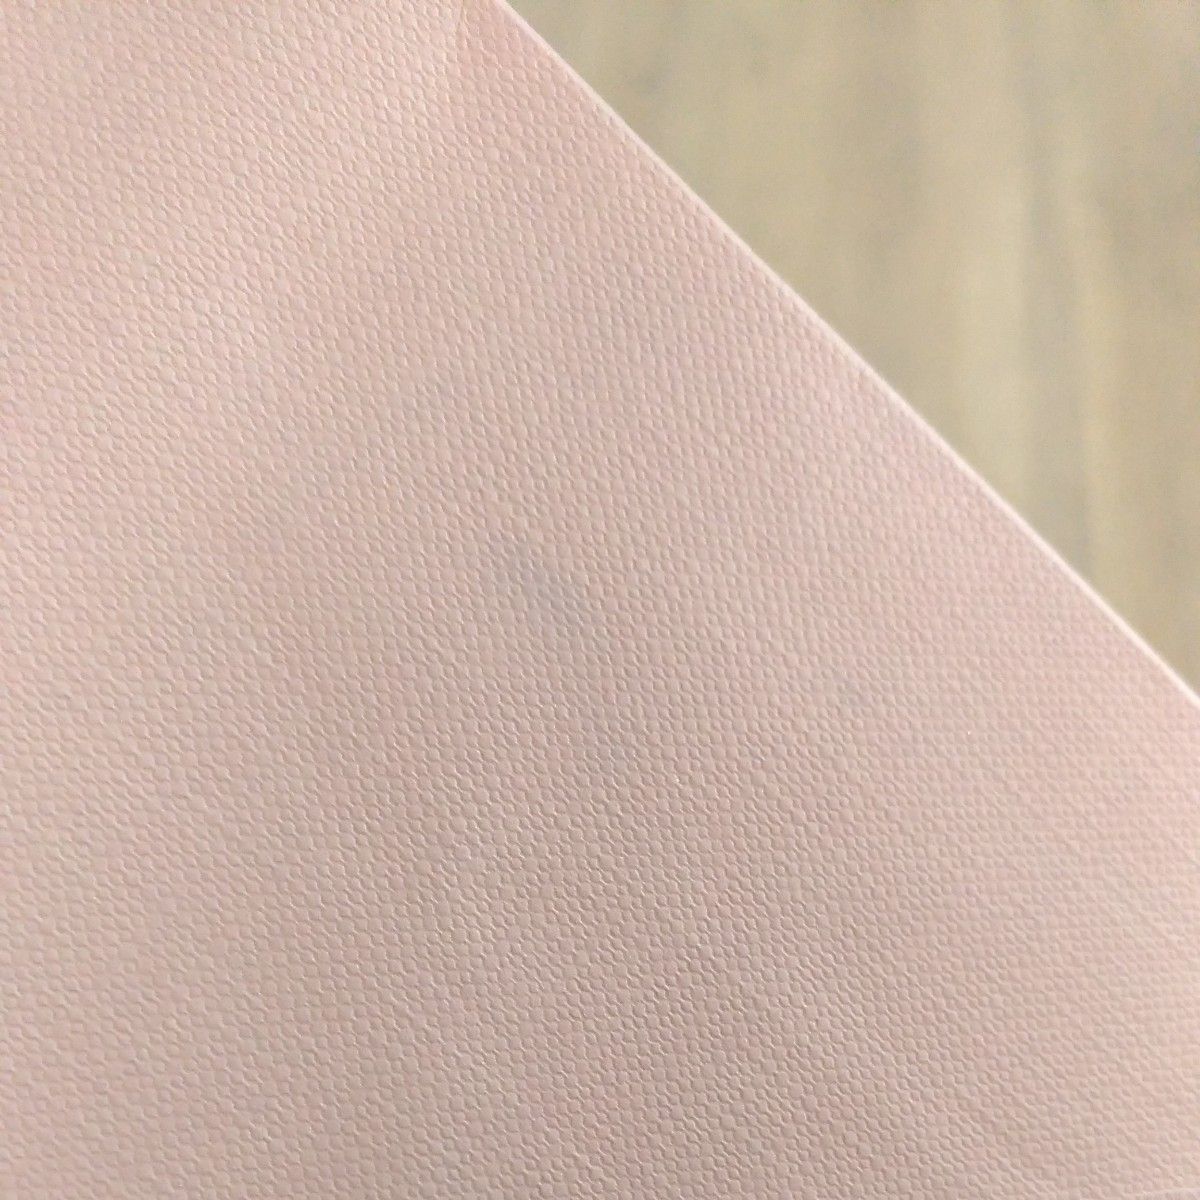 miumiu ショッパー 巾着袋 リボン セット売り ピンク レッド 紙袋 布袋